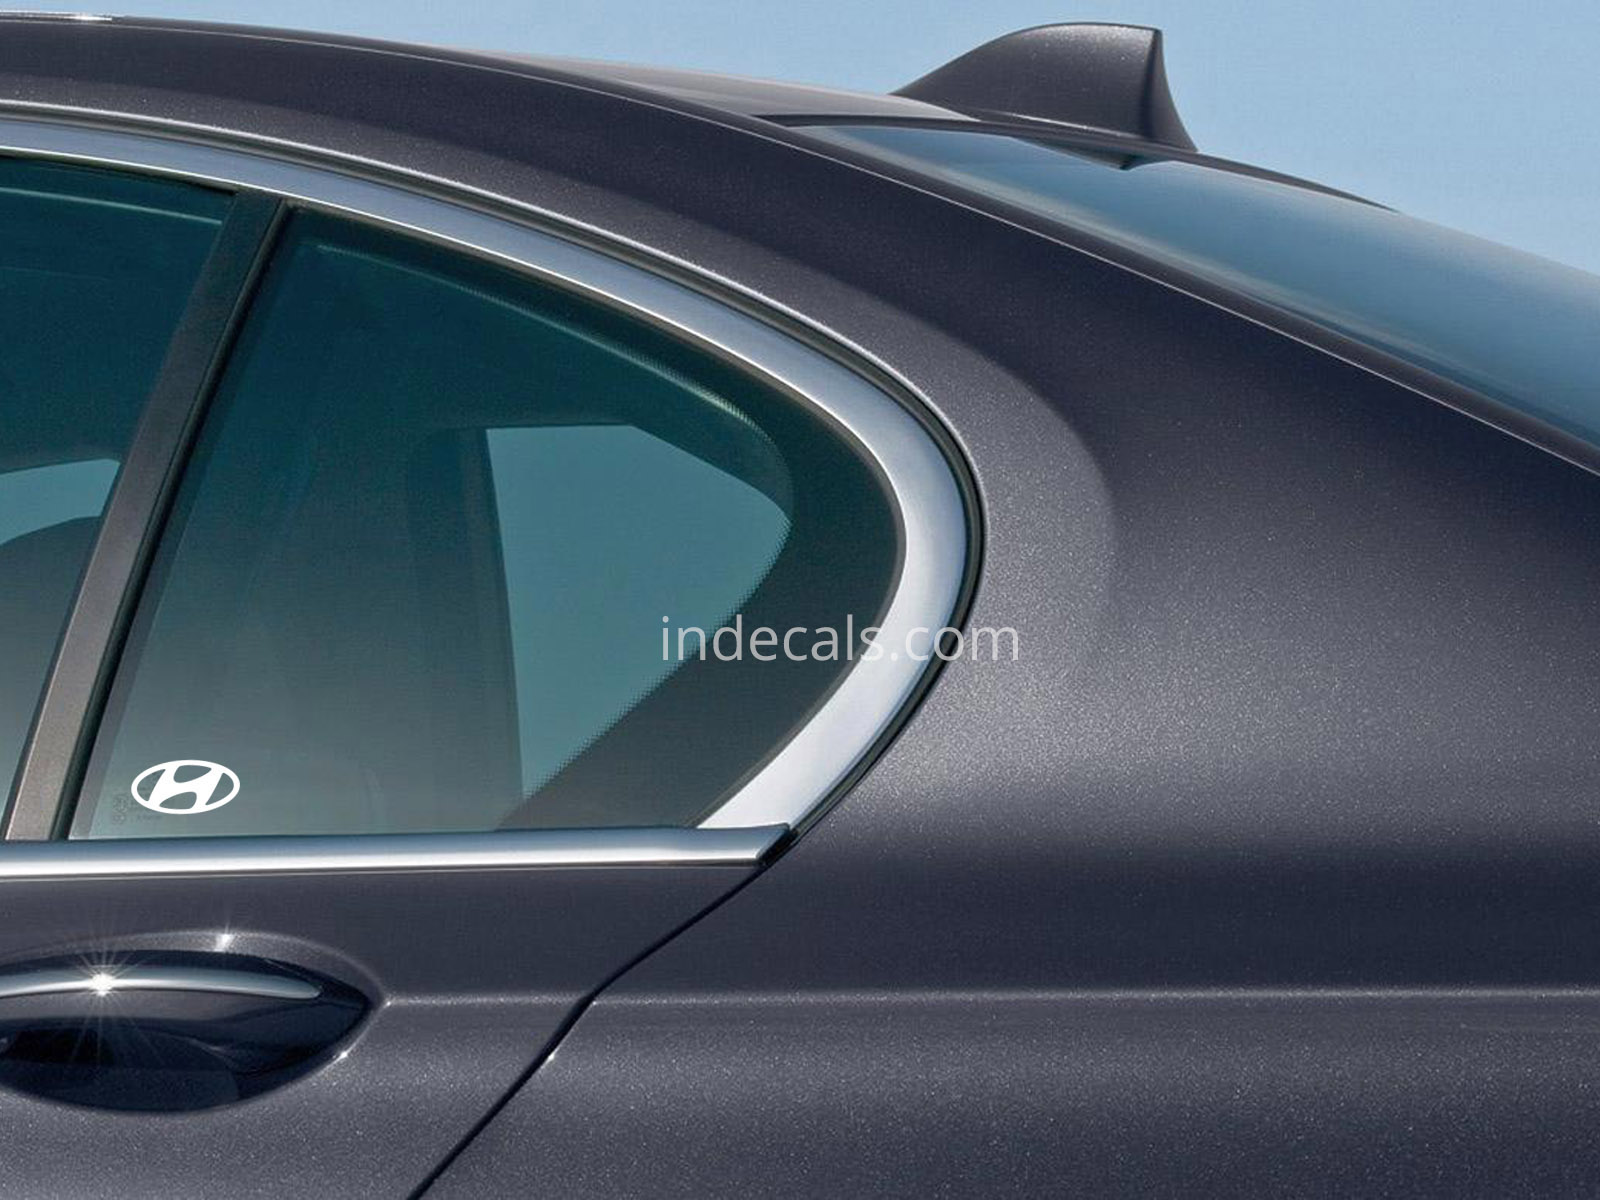 3 x Hyundai Stickers for Rear Window - White